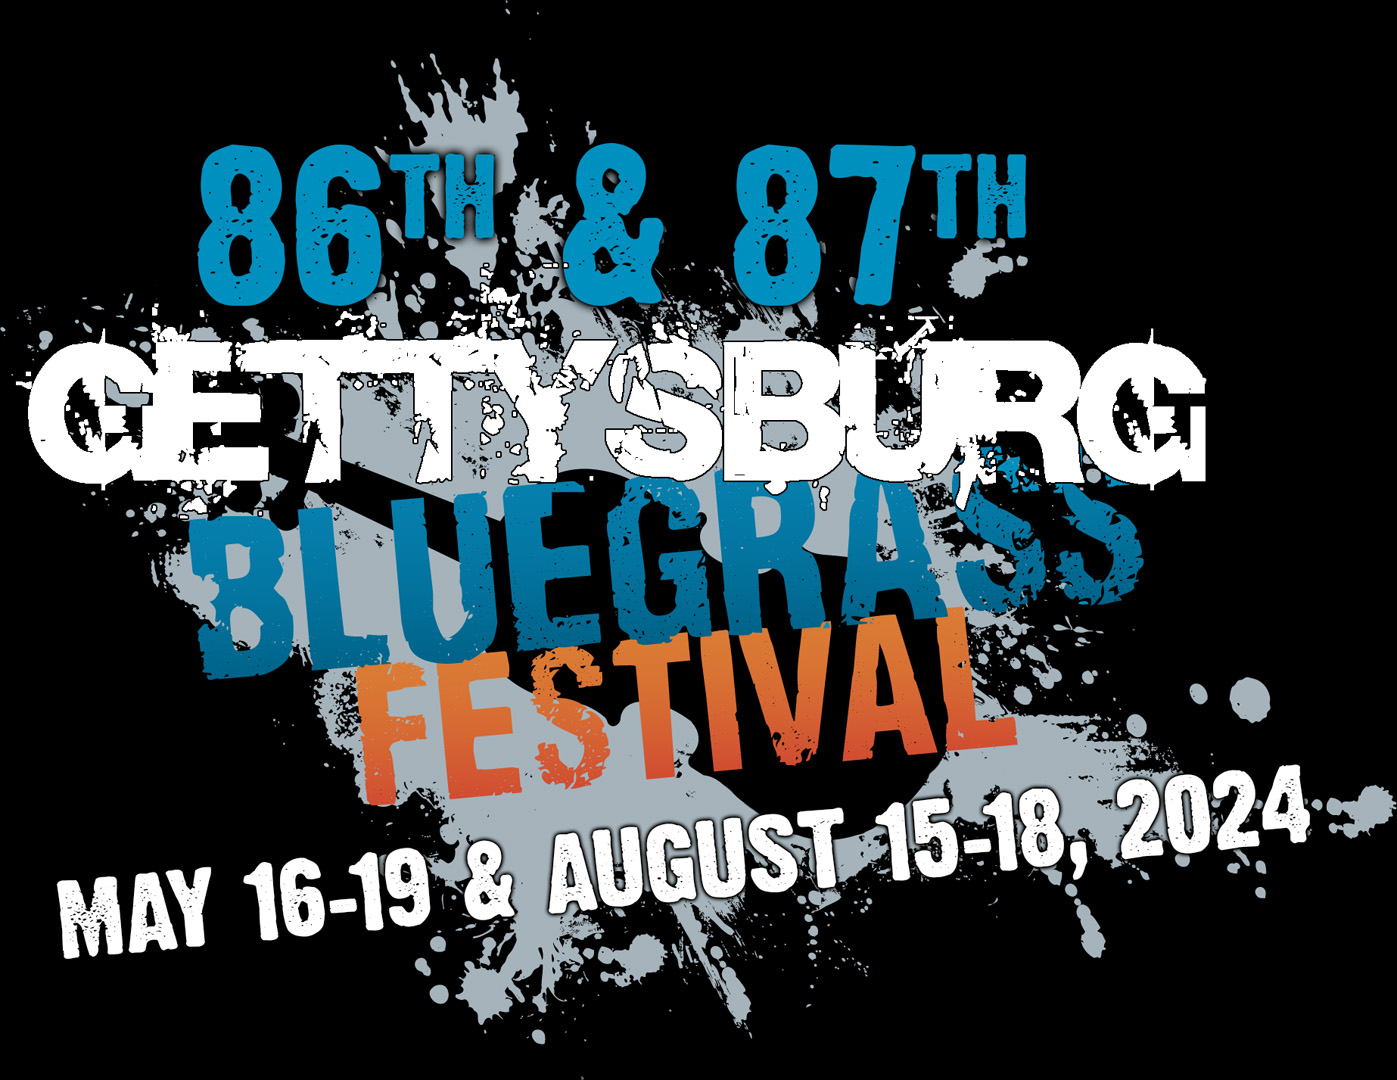 Gettysburg Bluegrass Festival Gettysburg, PA 17325